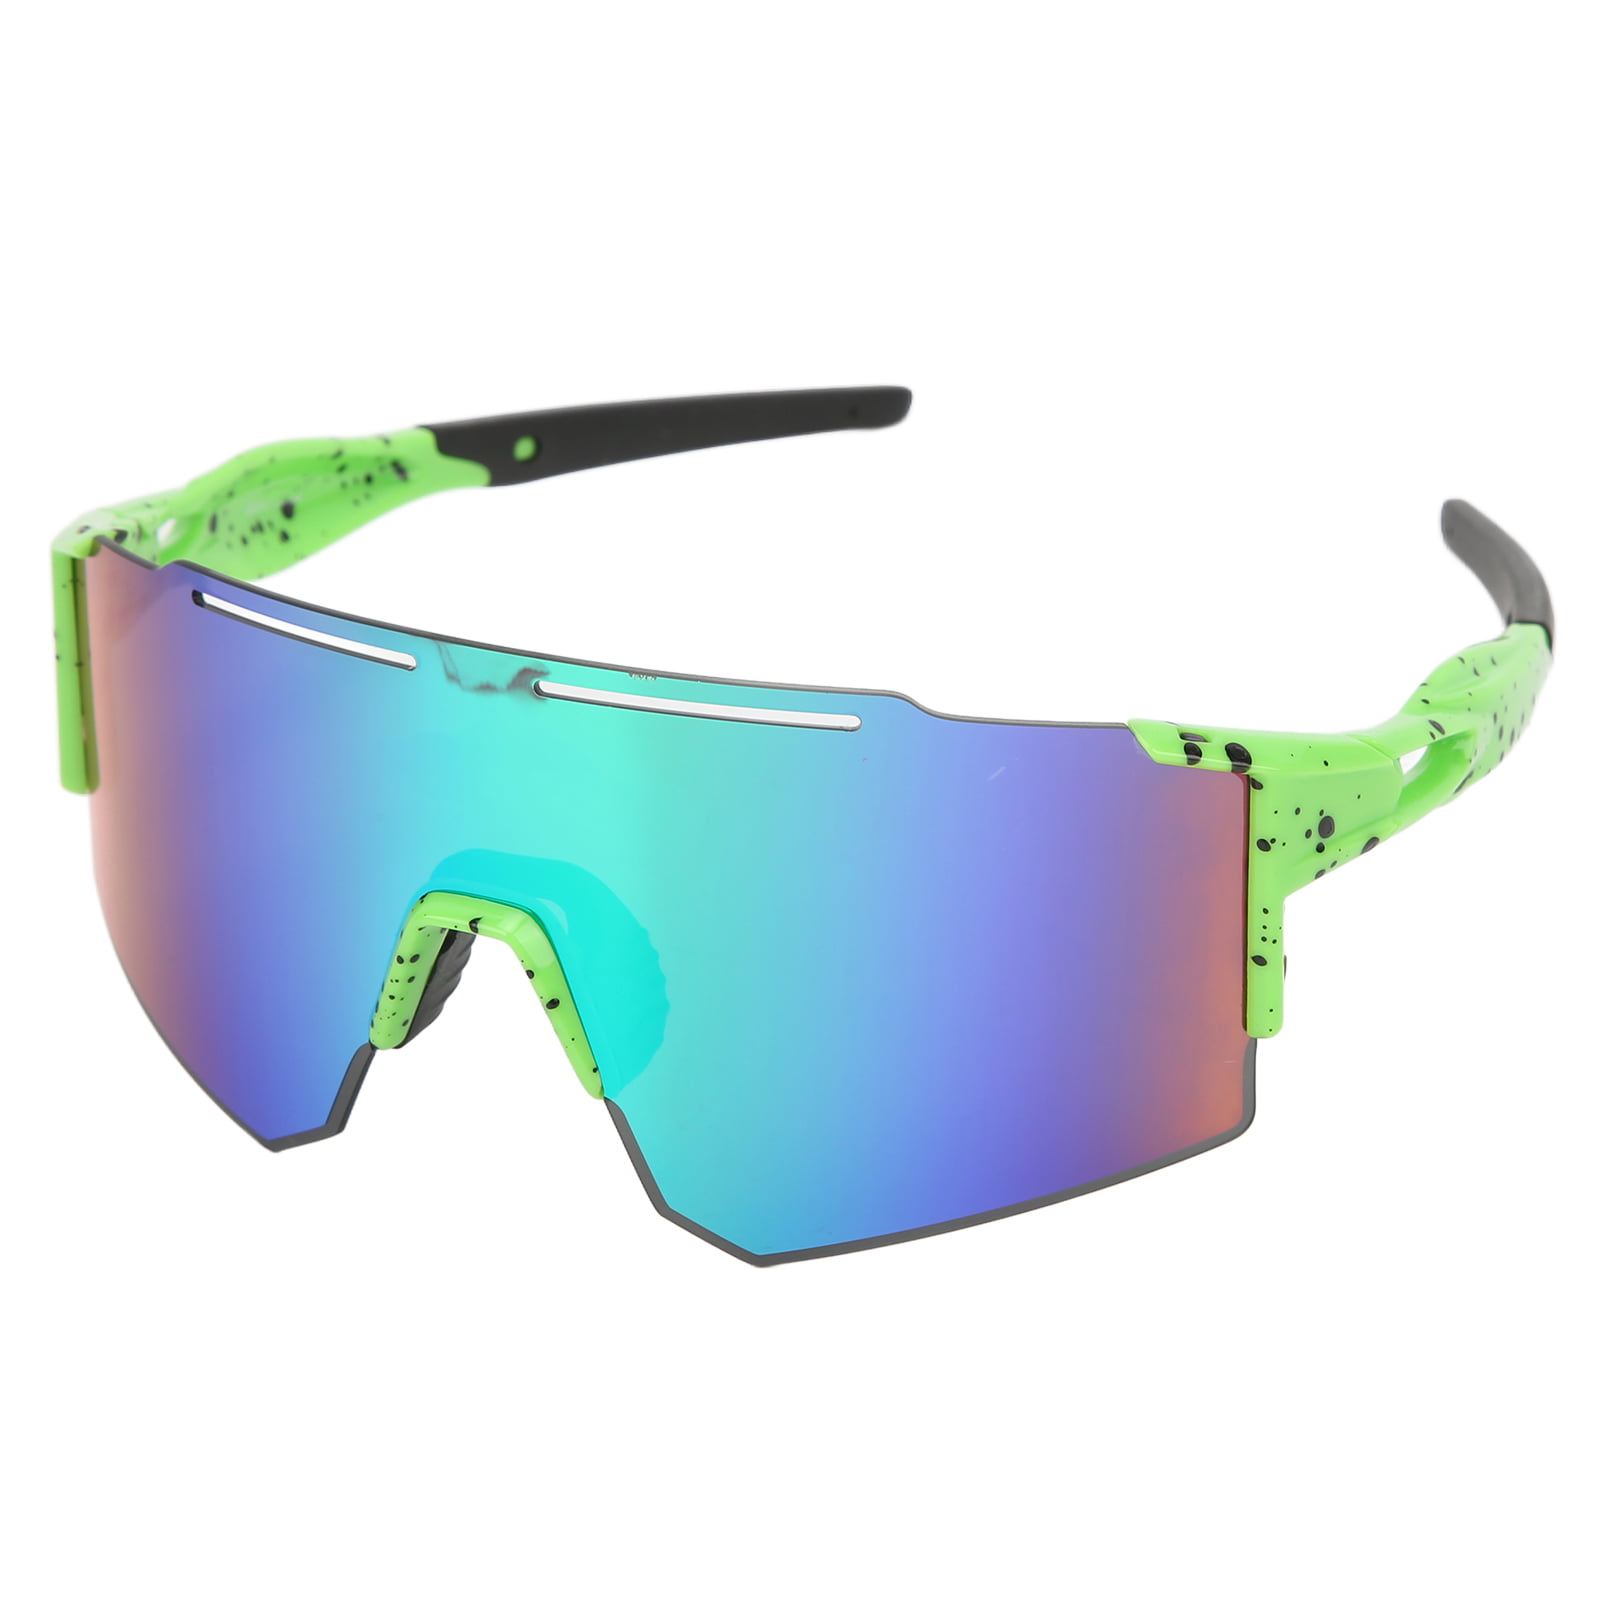 SGS-003-XSY Sport Sunglasses Women Sun Glasses Eyewear For Cycling 